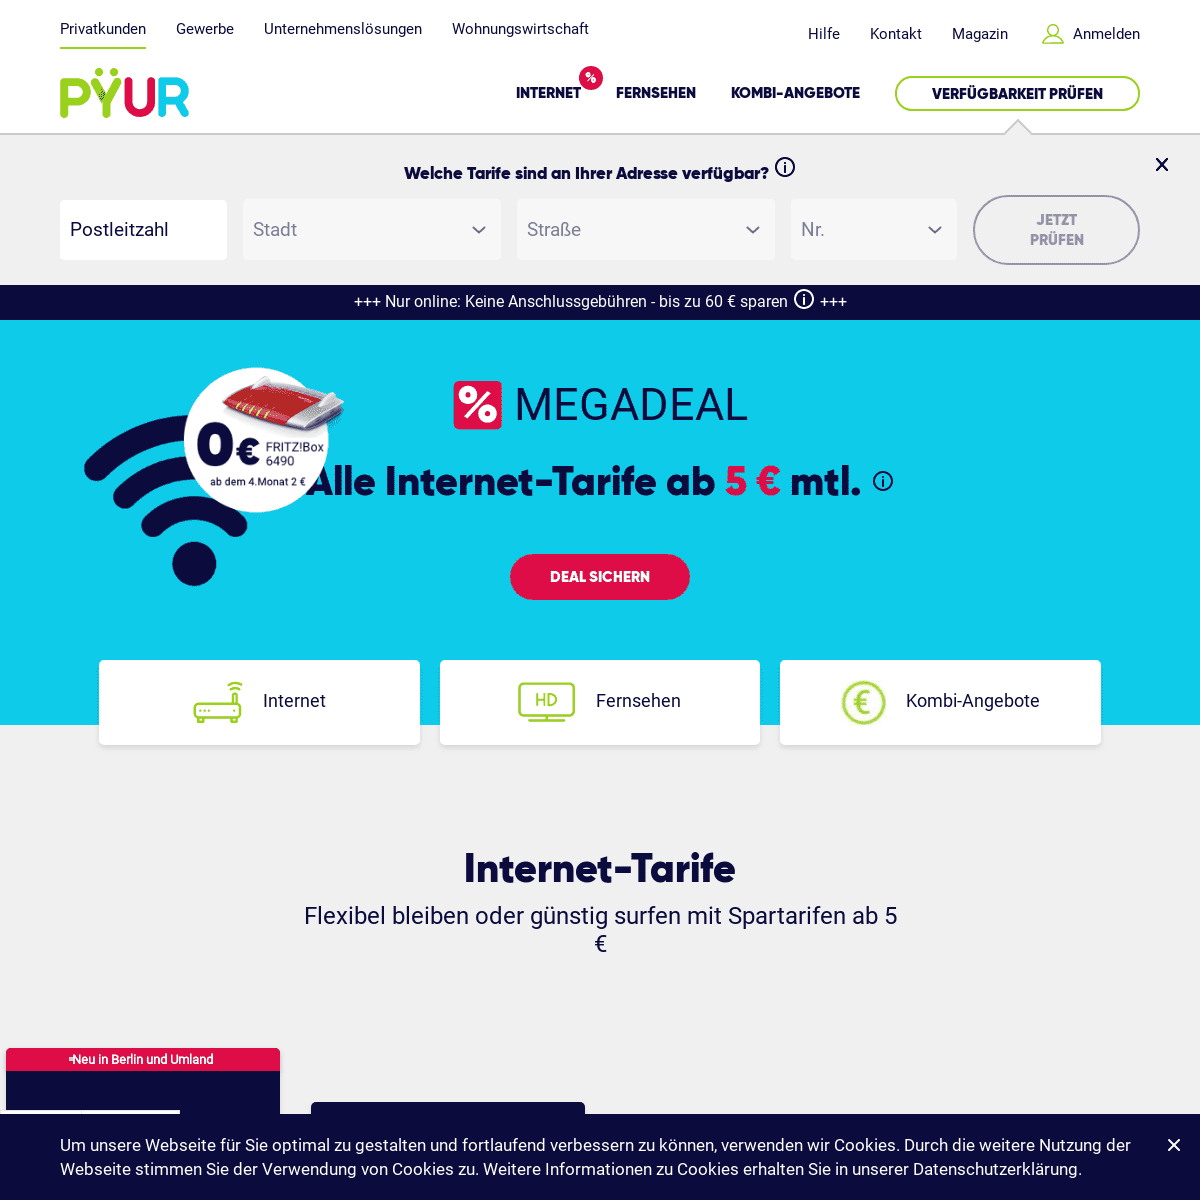 A complete backup of pyur.com